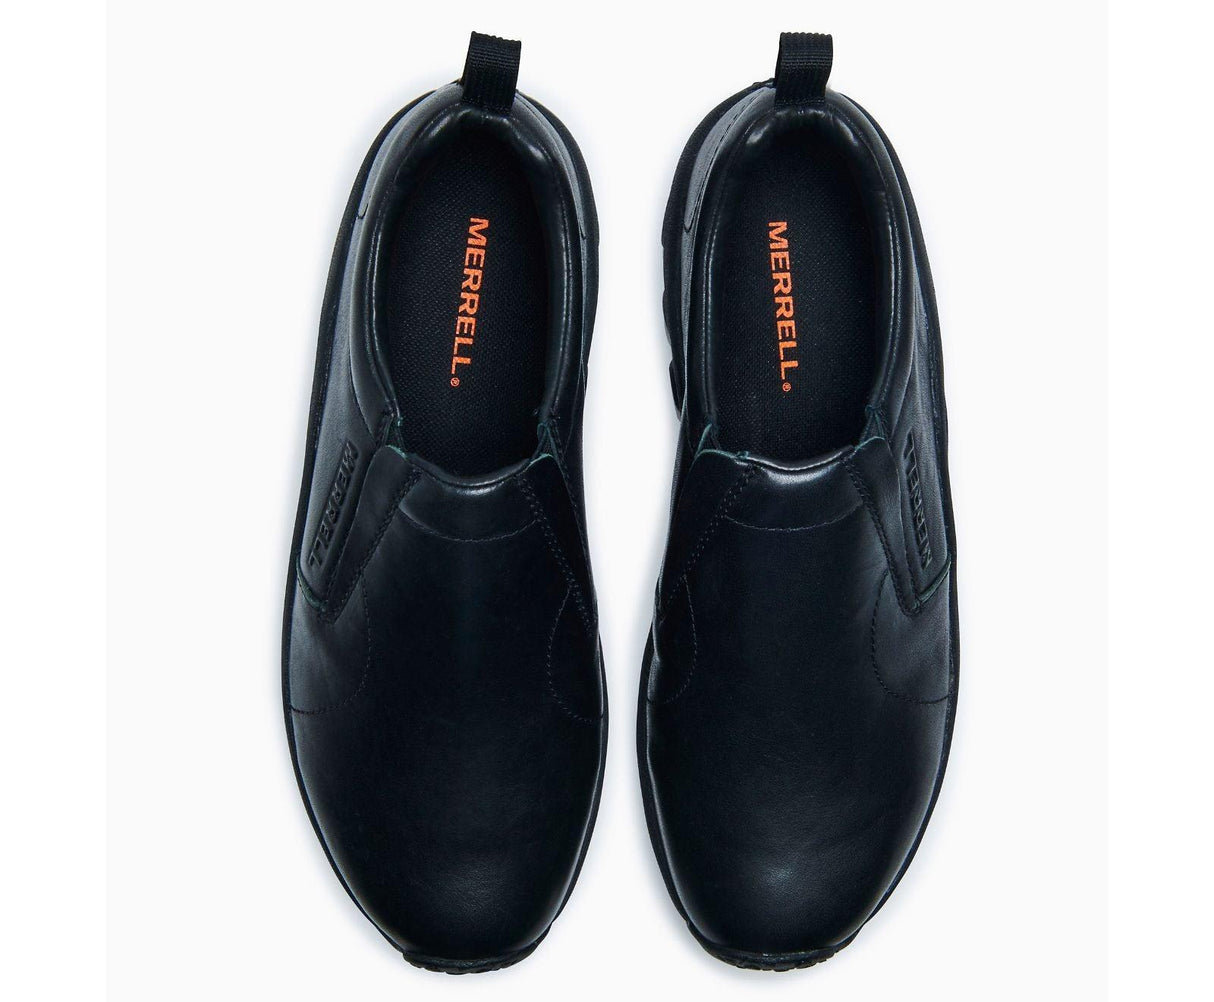 Merrell Men's Jungle Moc Leather Shoe - A&M Clothing & Shoes